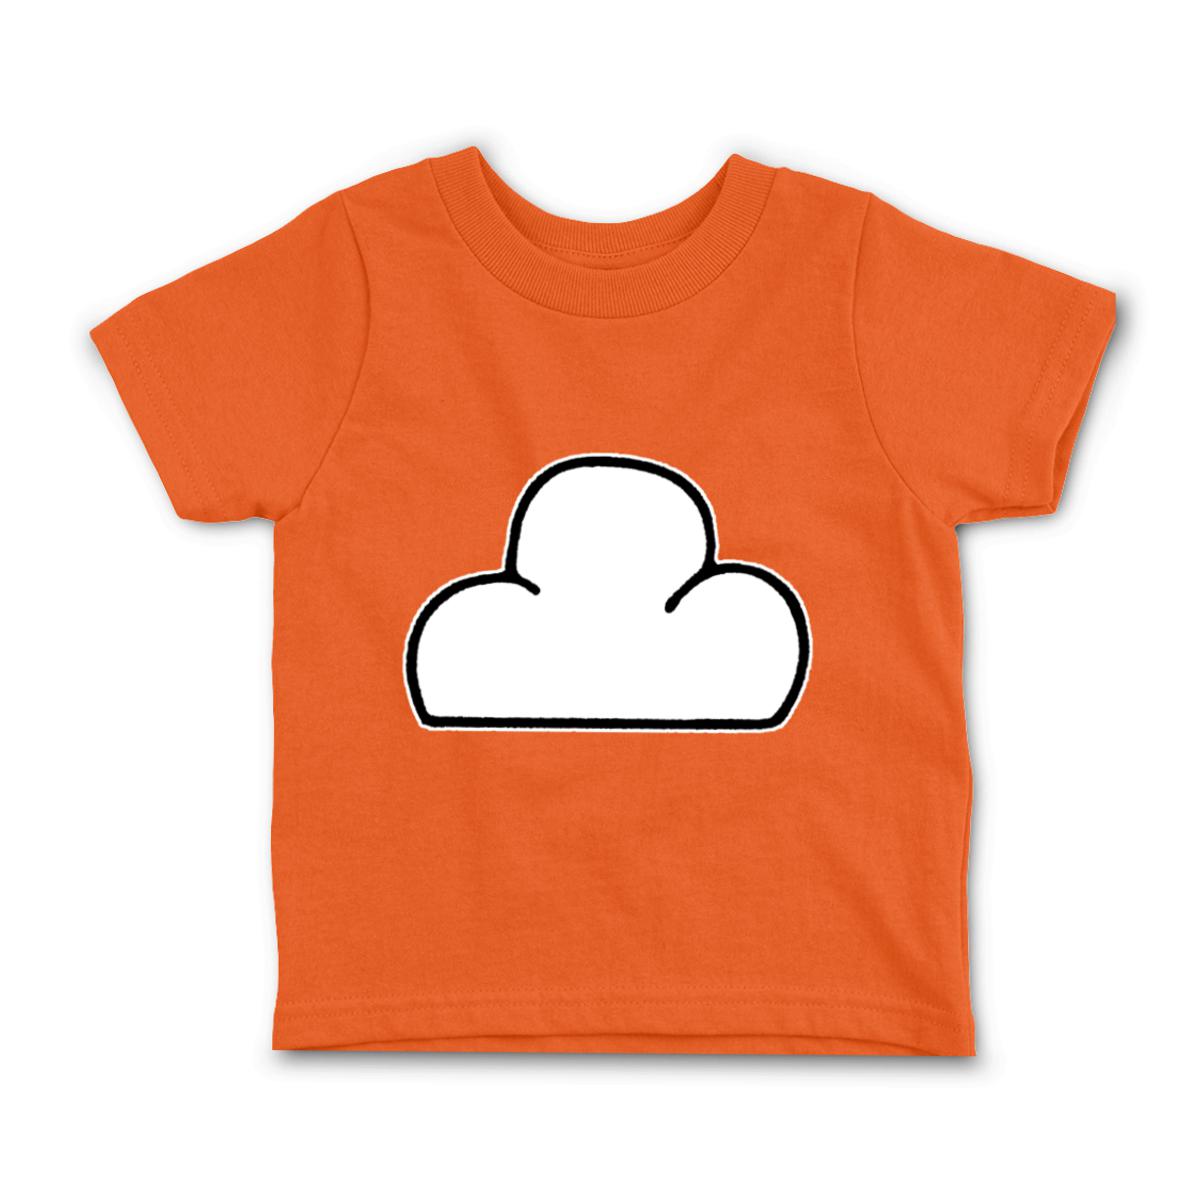 Cloud Infant Tee 18M orange